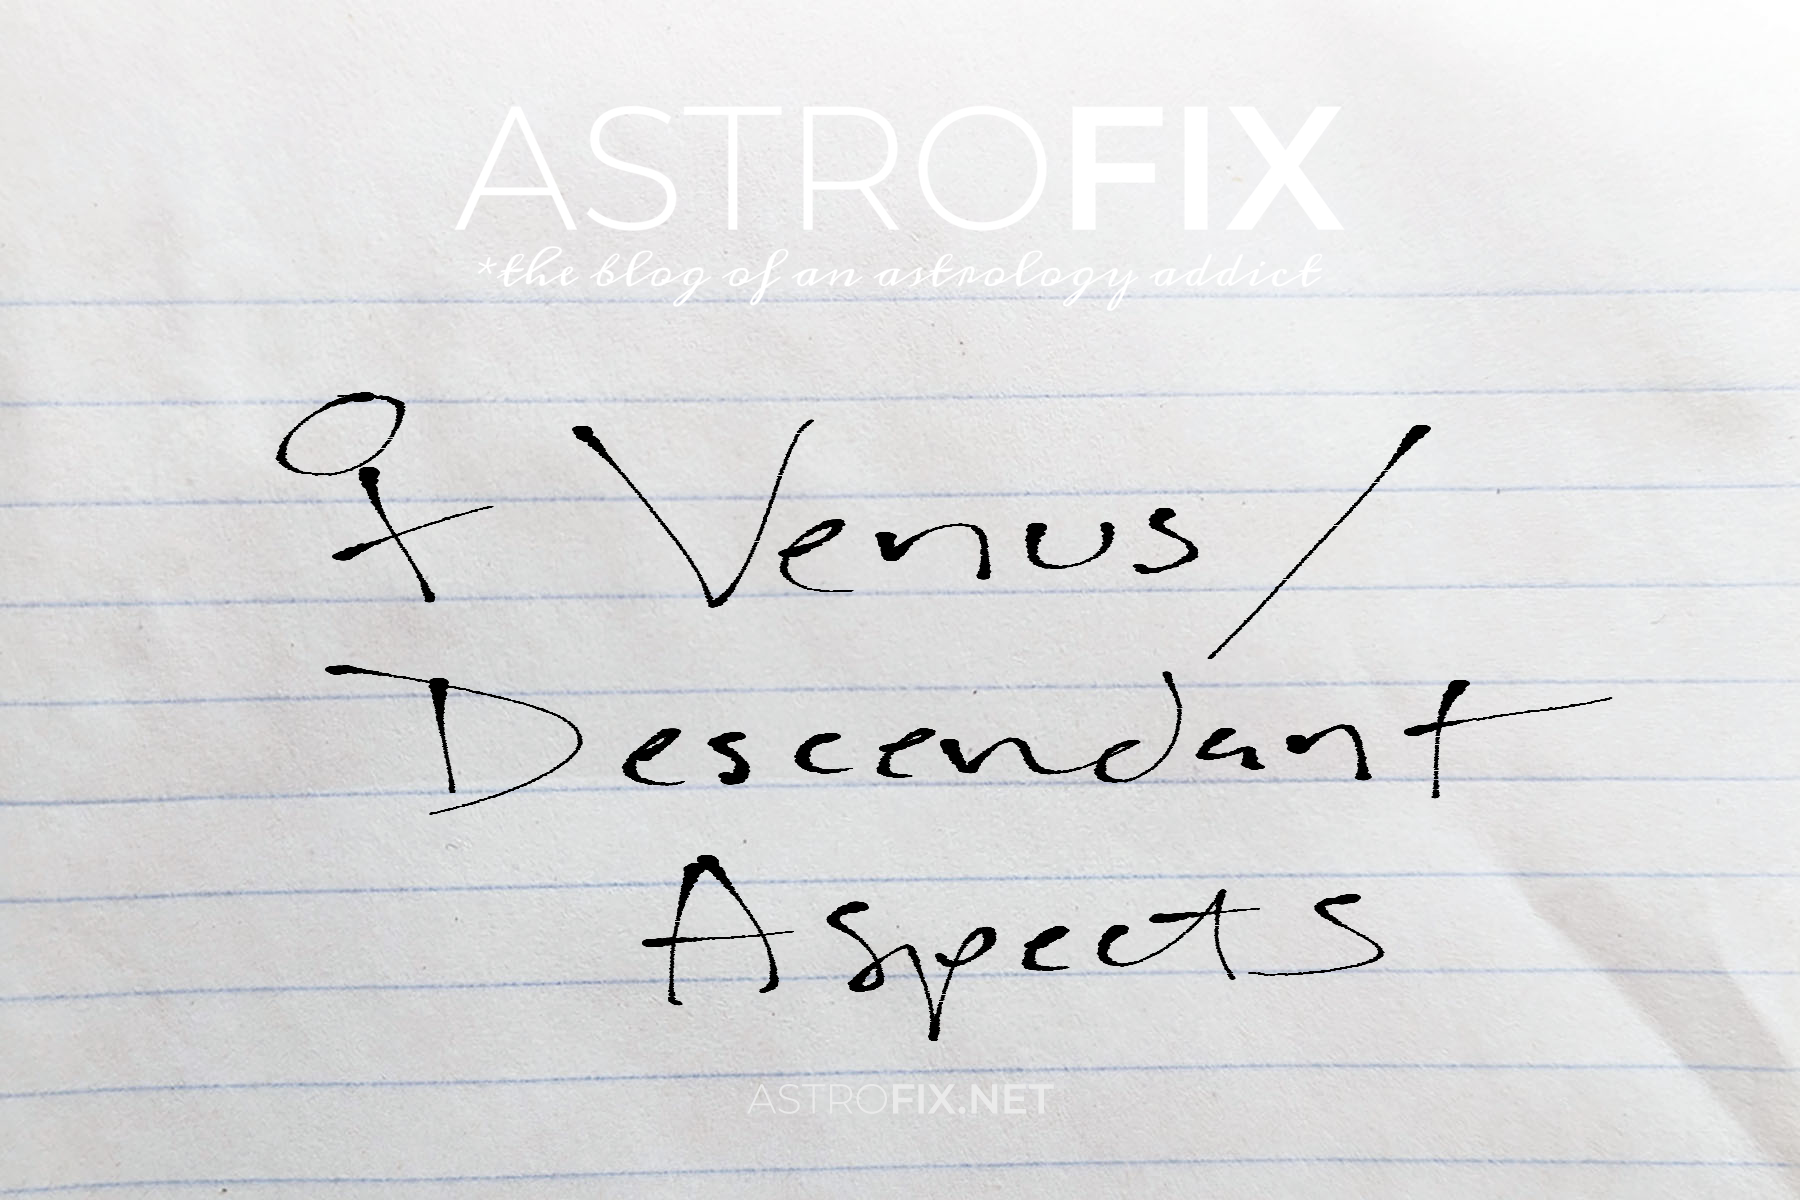 brainstorm-venus-descendant-astrology-aspects